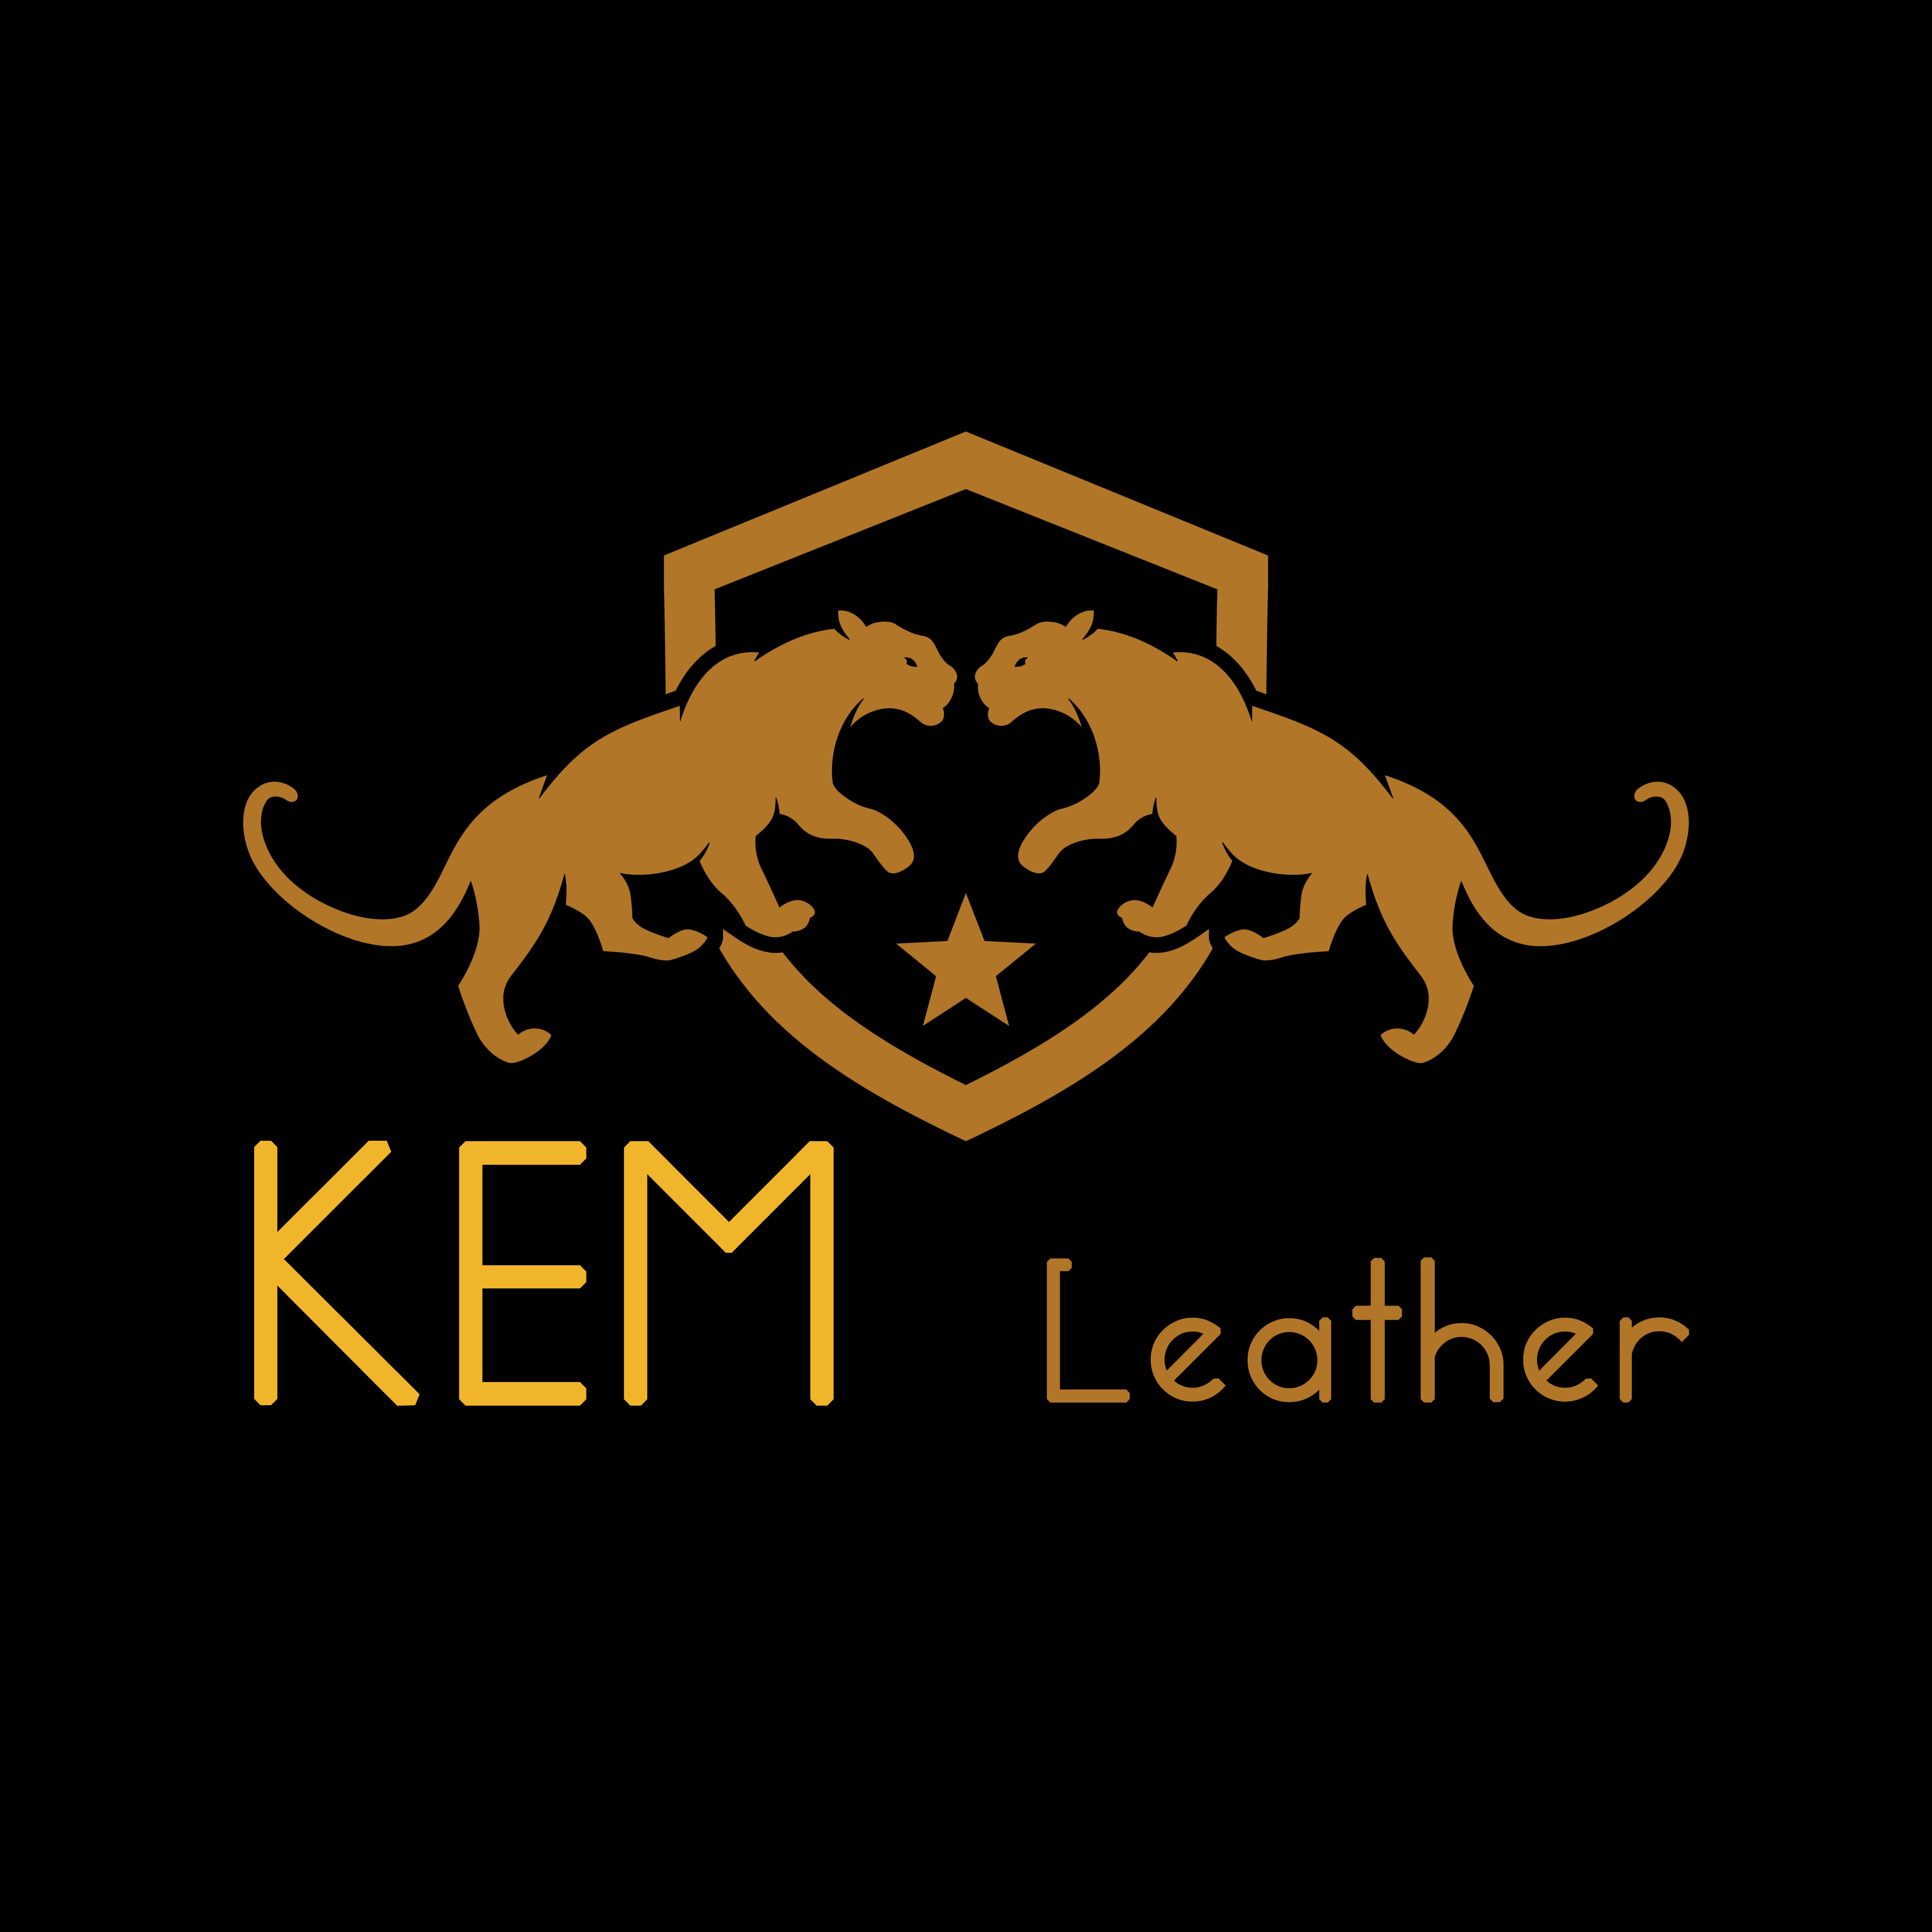 KEM Leather